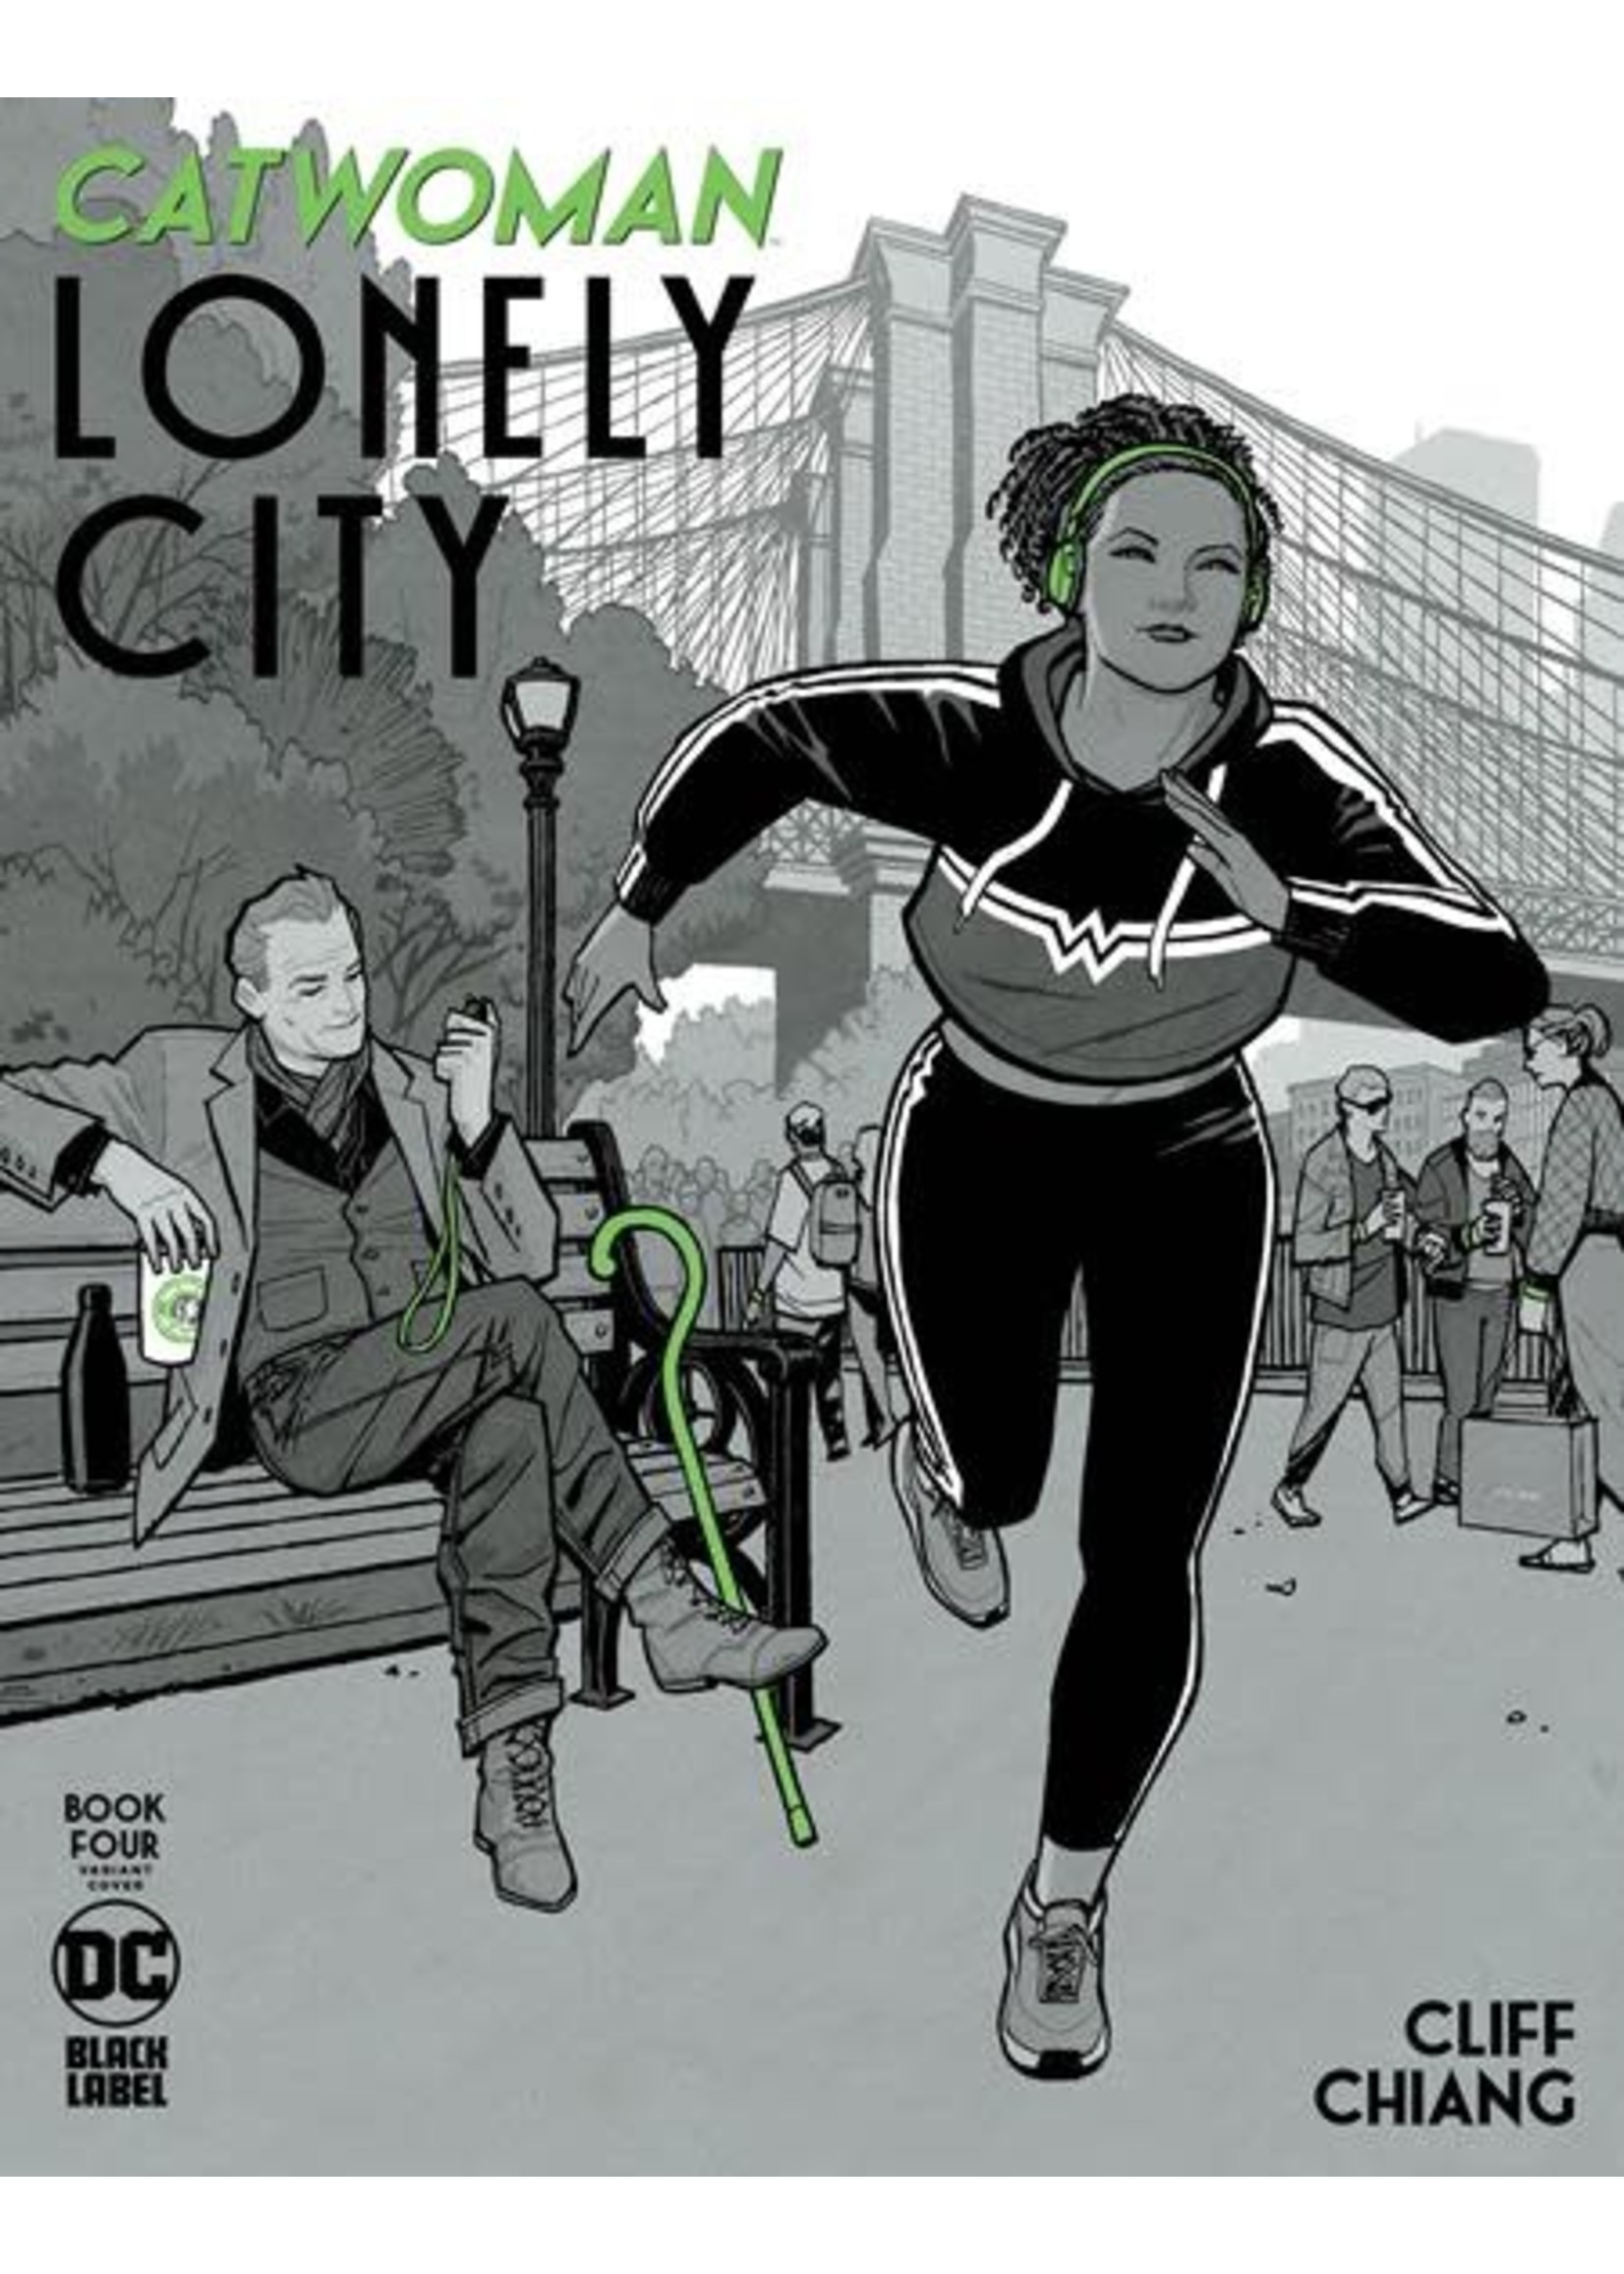 DC COMICS CATWOMAN LONELY CITY #4 (OF 4) CVR B CHIANG VAR